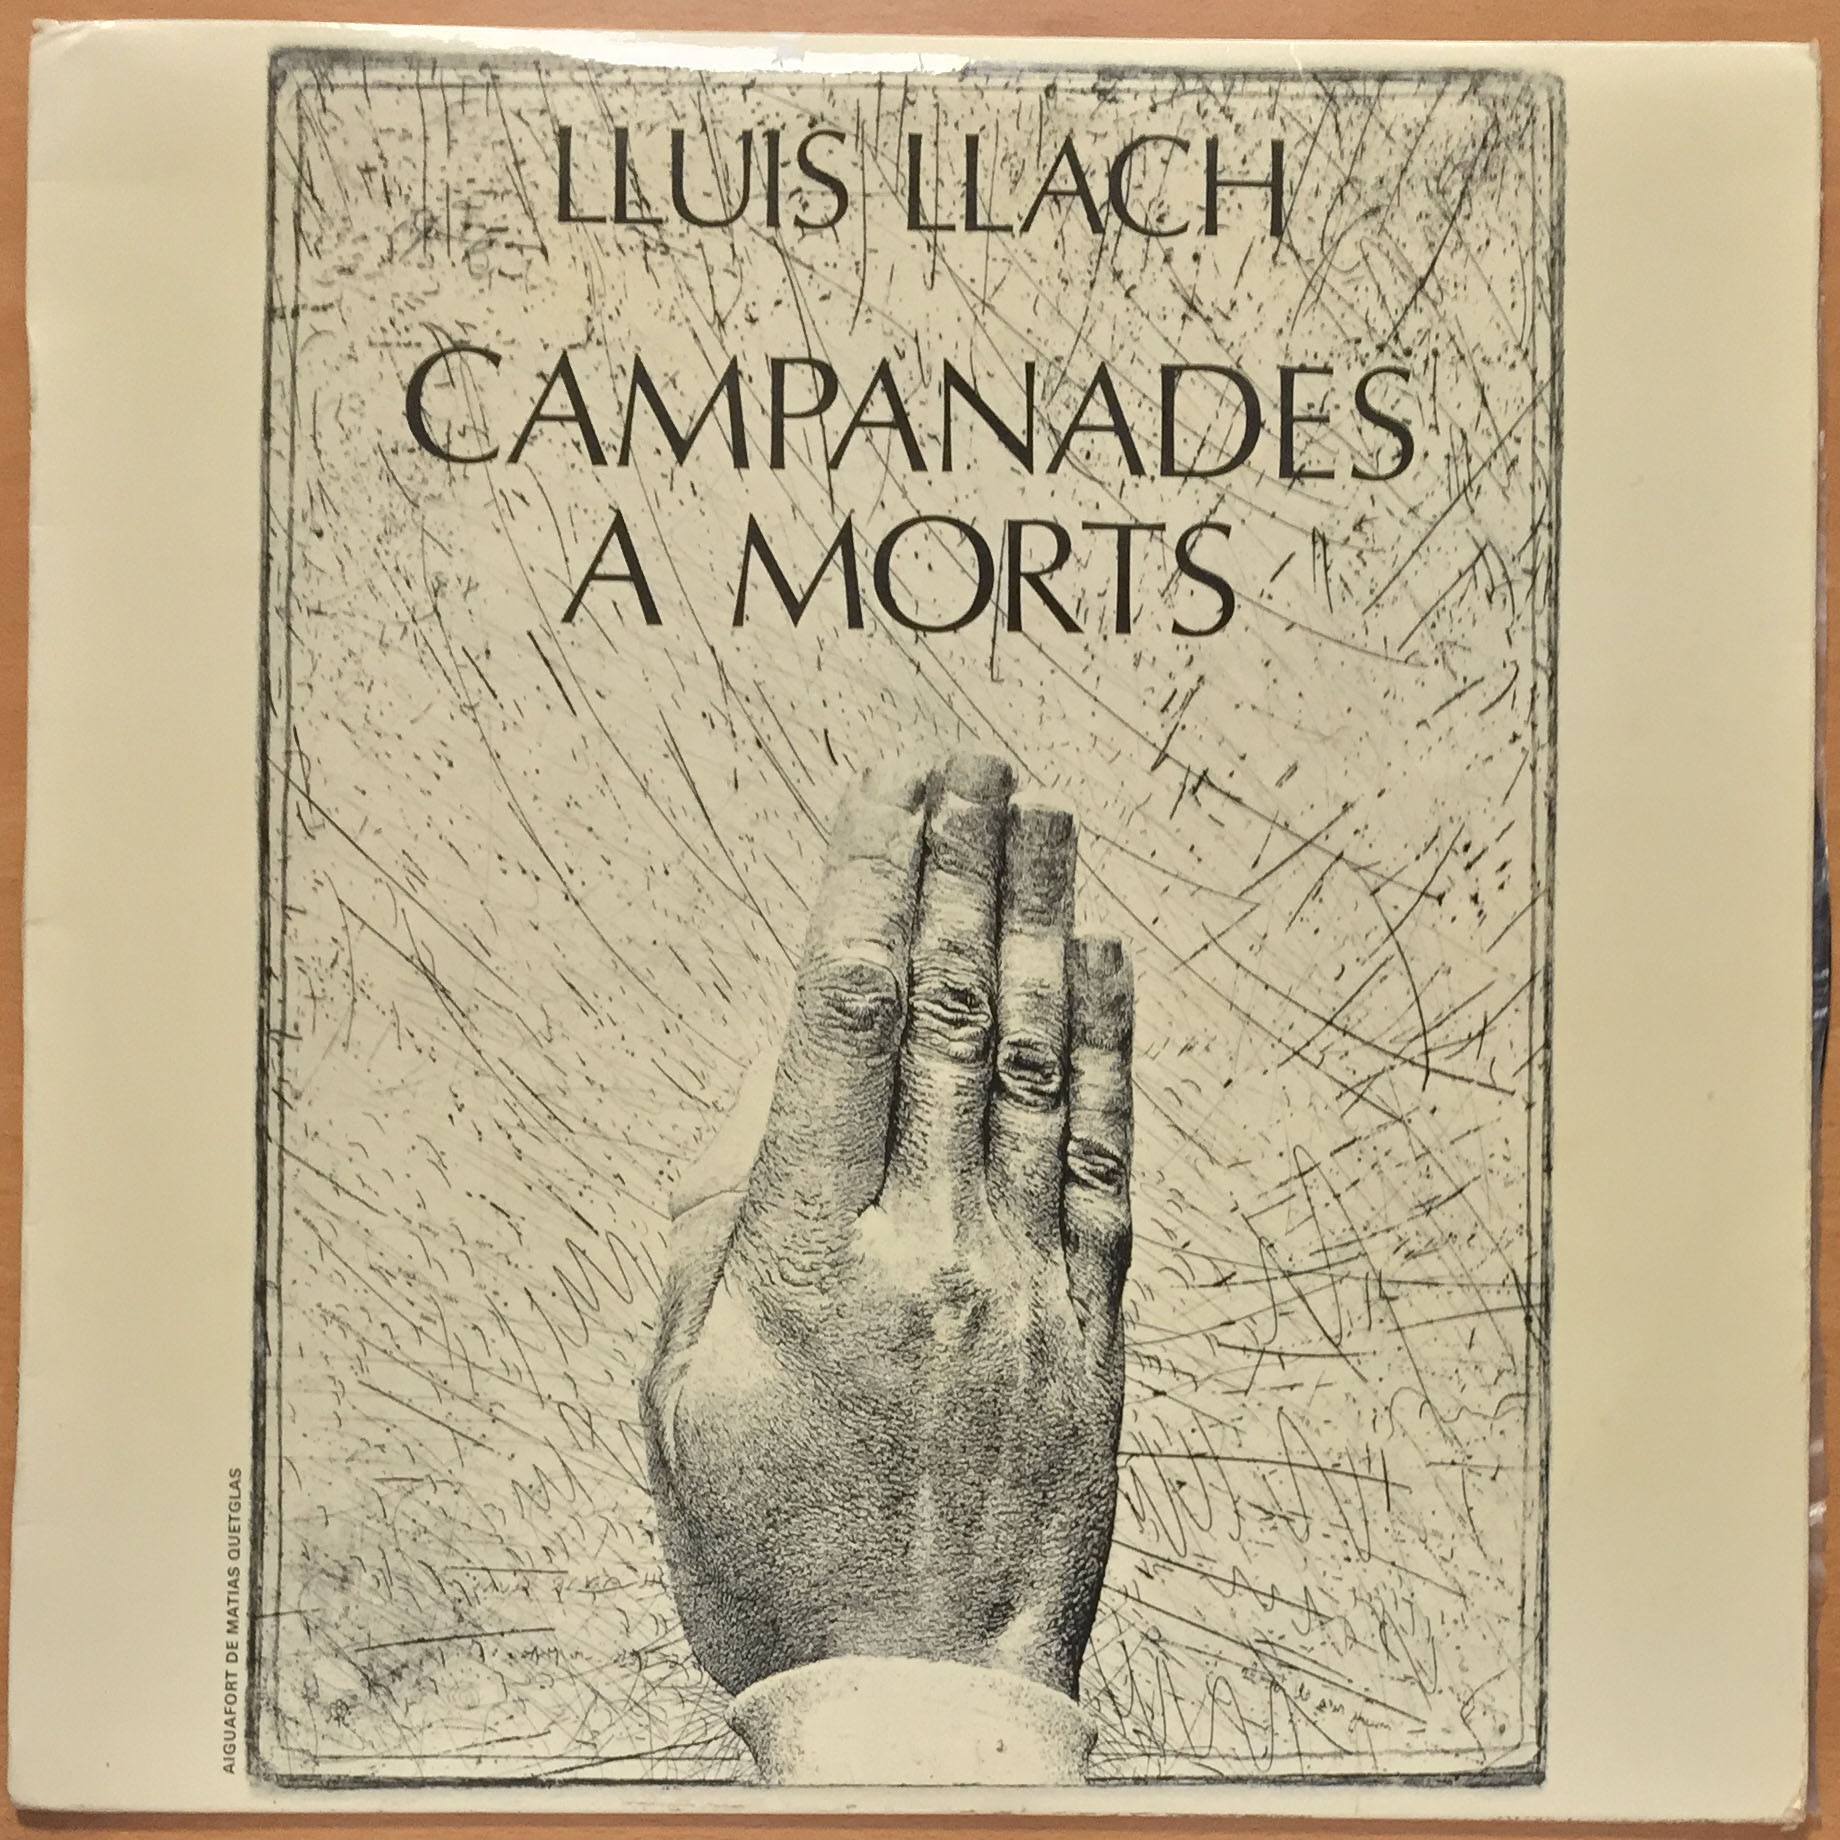 Lluis Llach-Campanades a morts. 1977 Movieplay